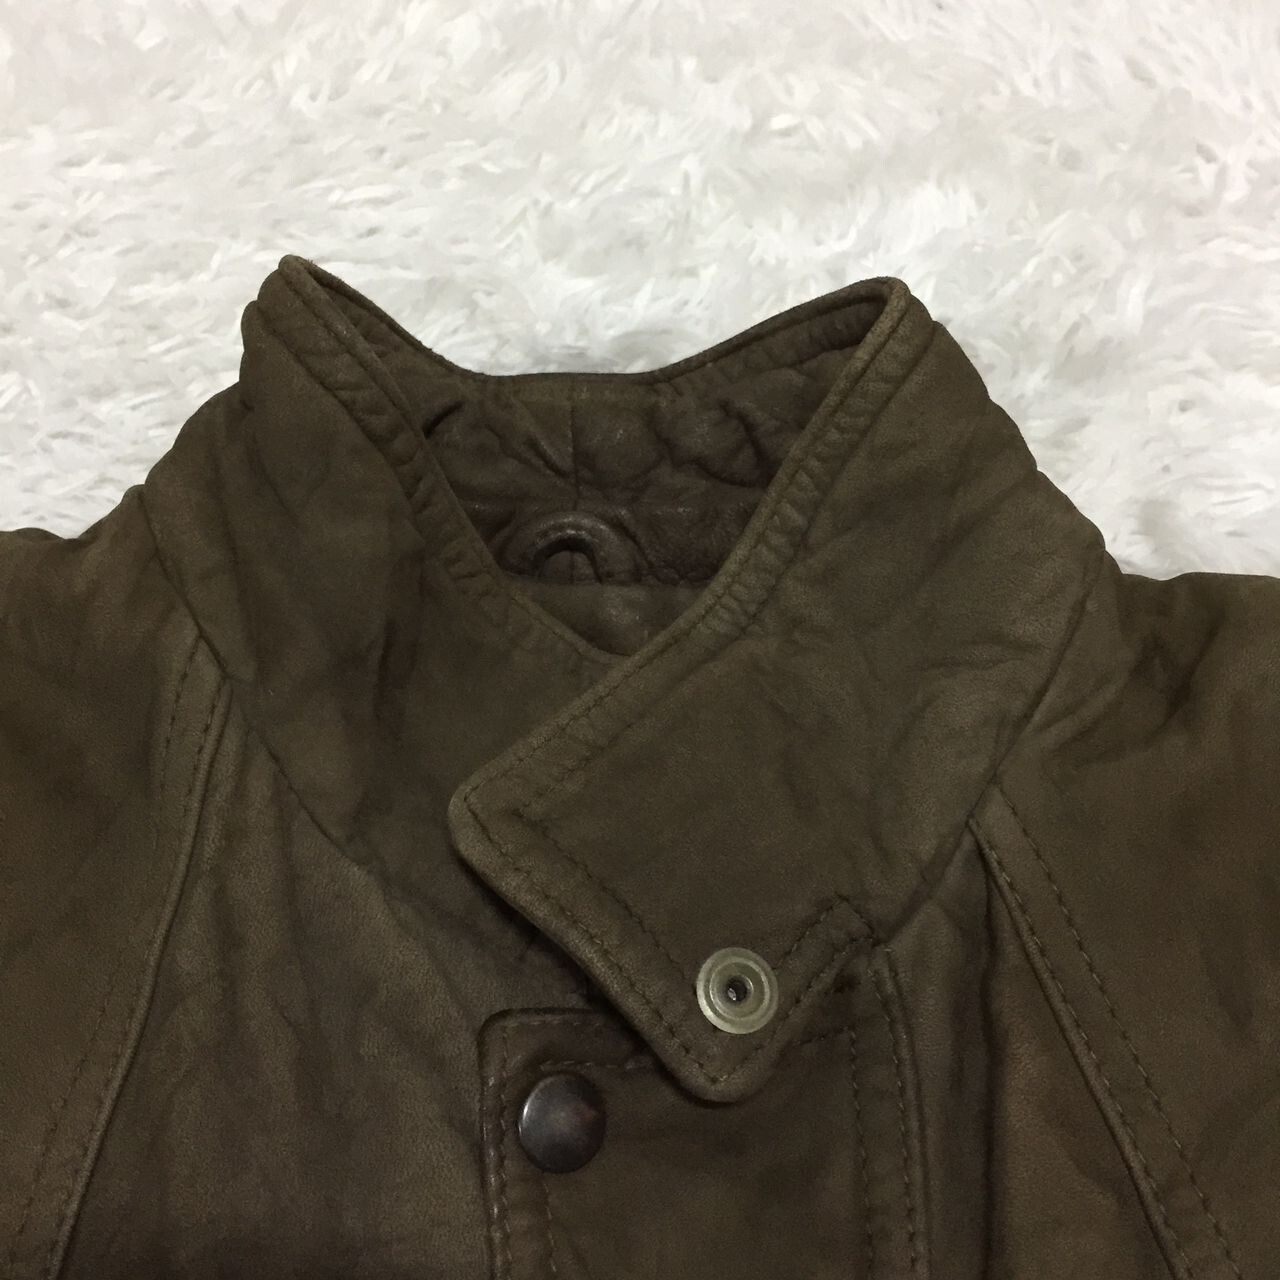 Vera Pelle Vera Pelle Classic Italian Leather Jacket Made in Italy Size US M / EU 48-50 / 2 - 6 Thumbnail